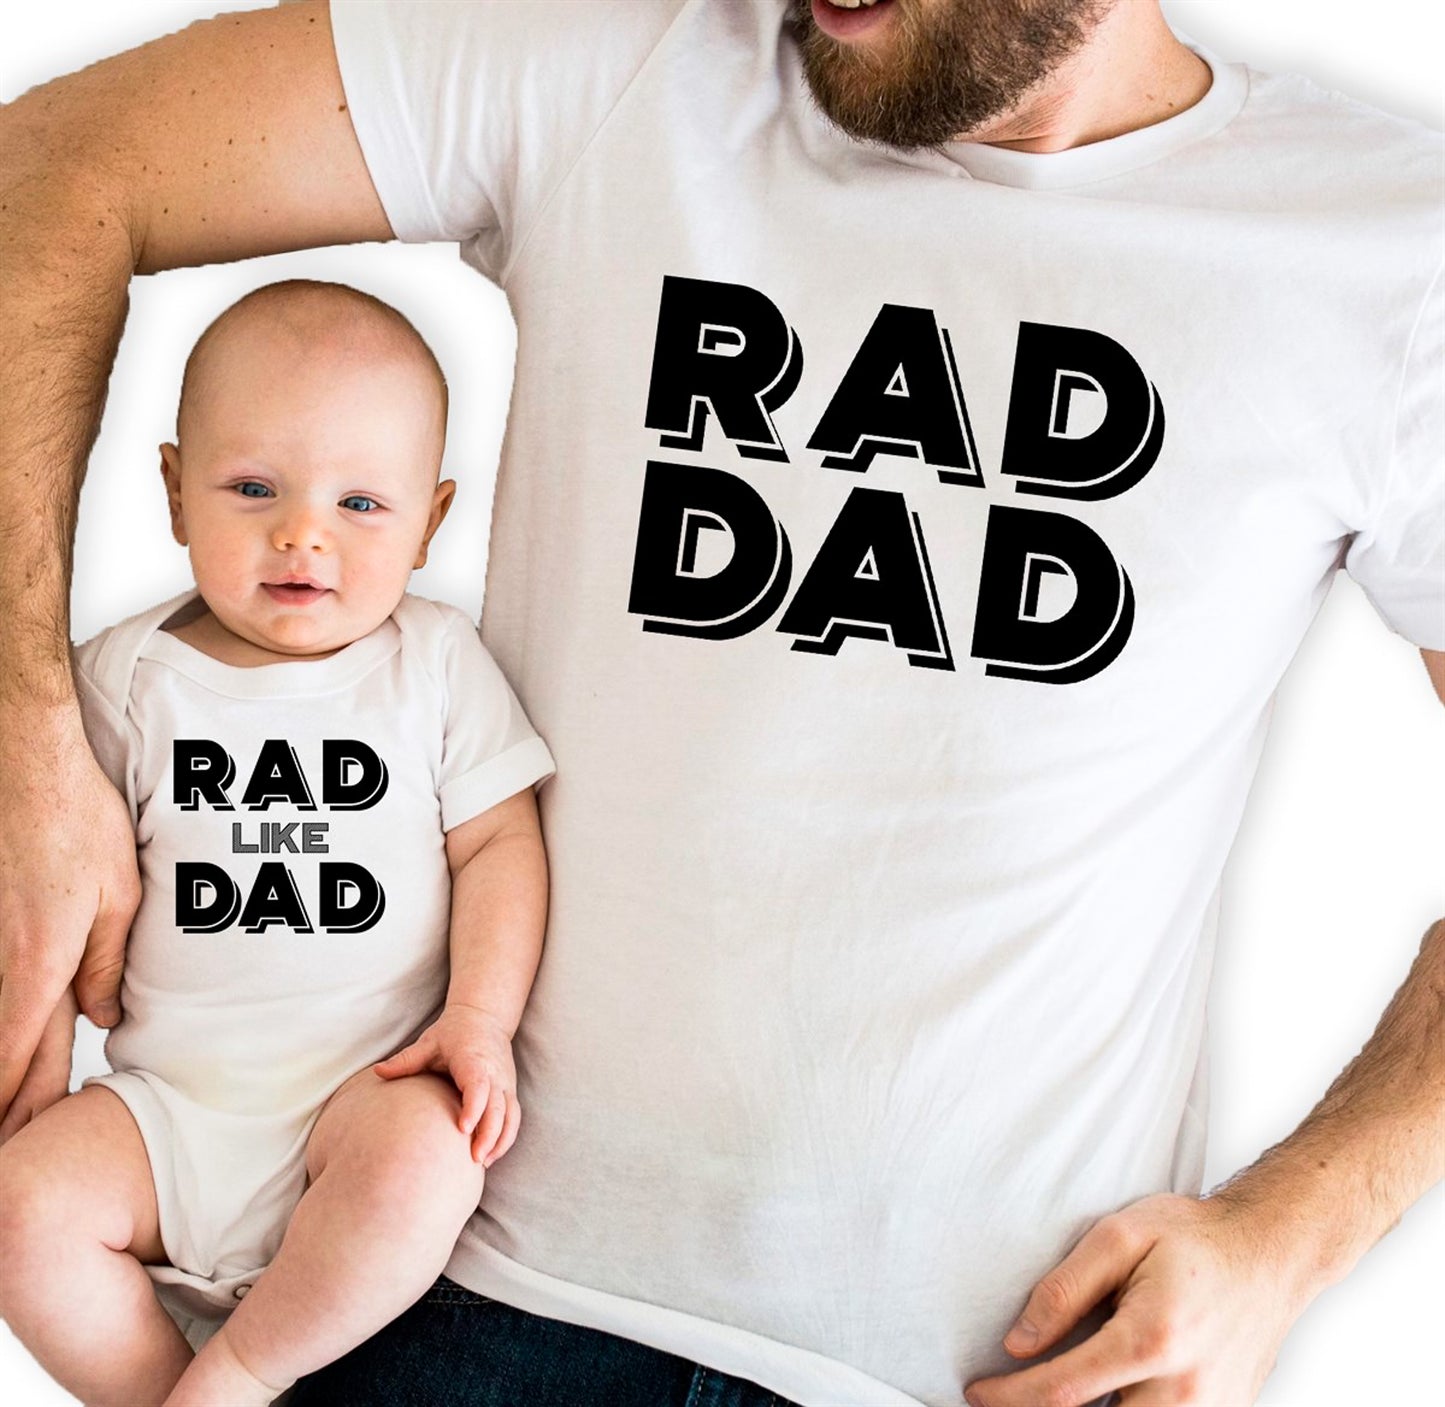 Rad Dad T-Shirt or Crew Sweatshirt